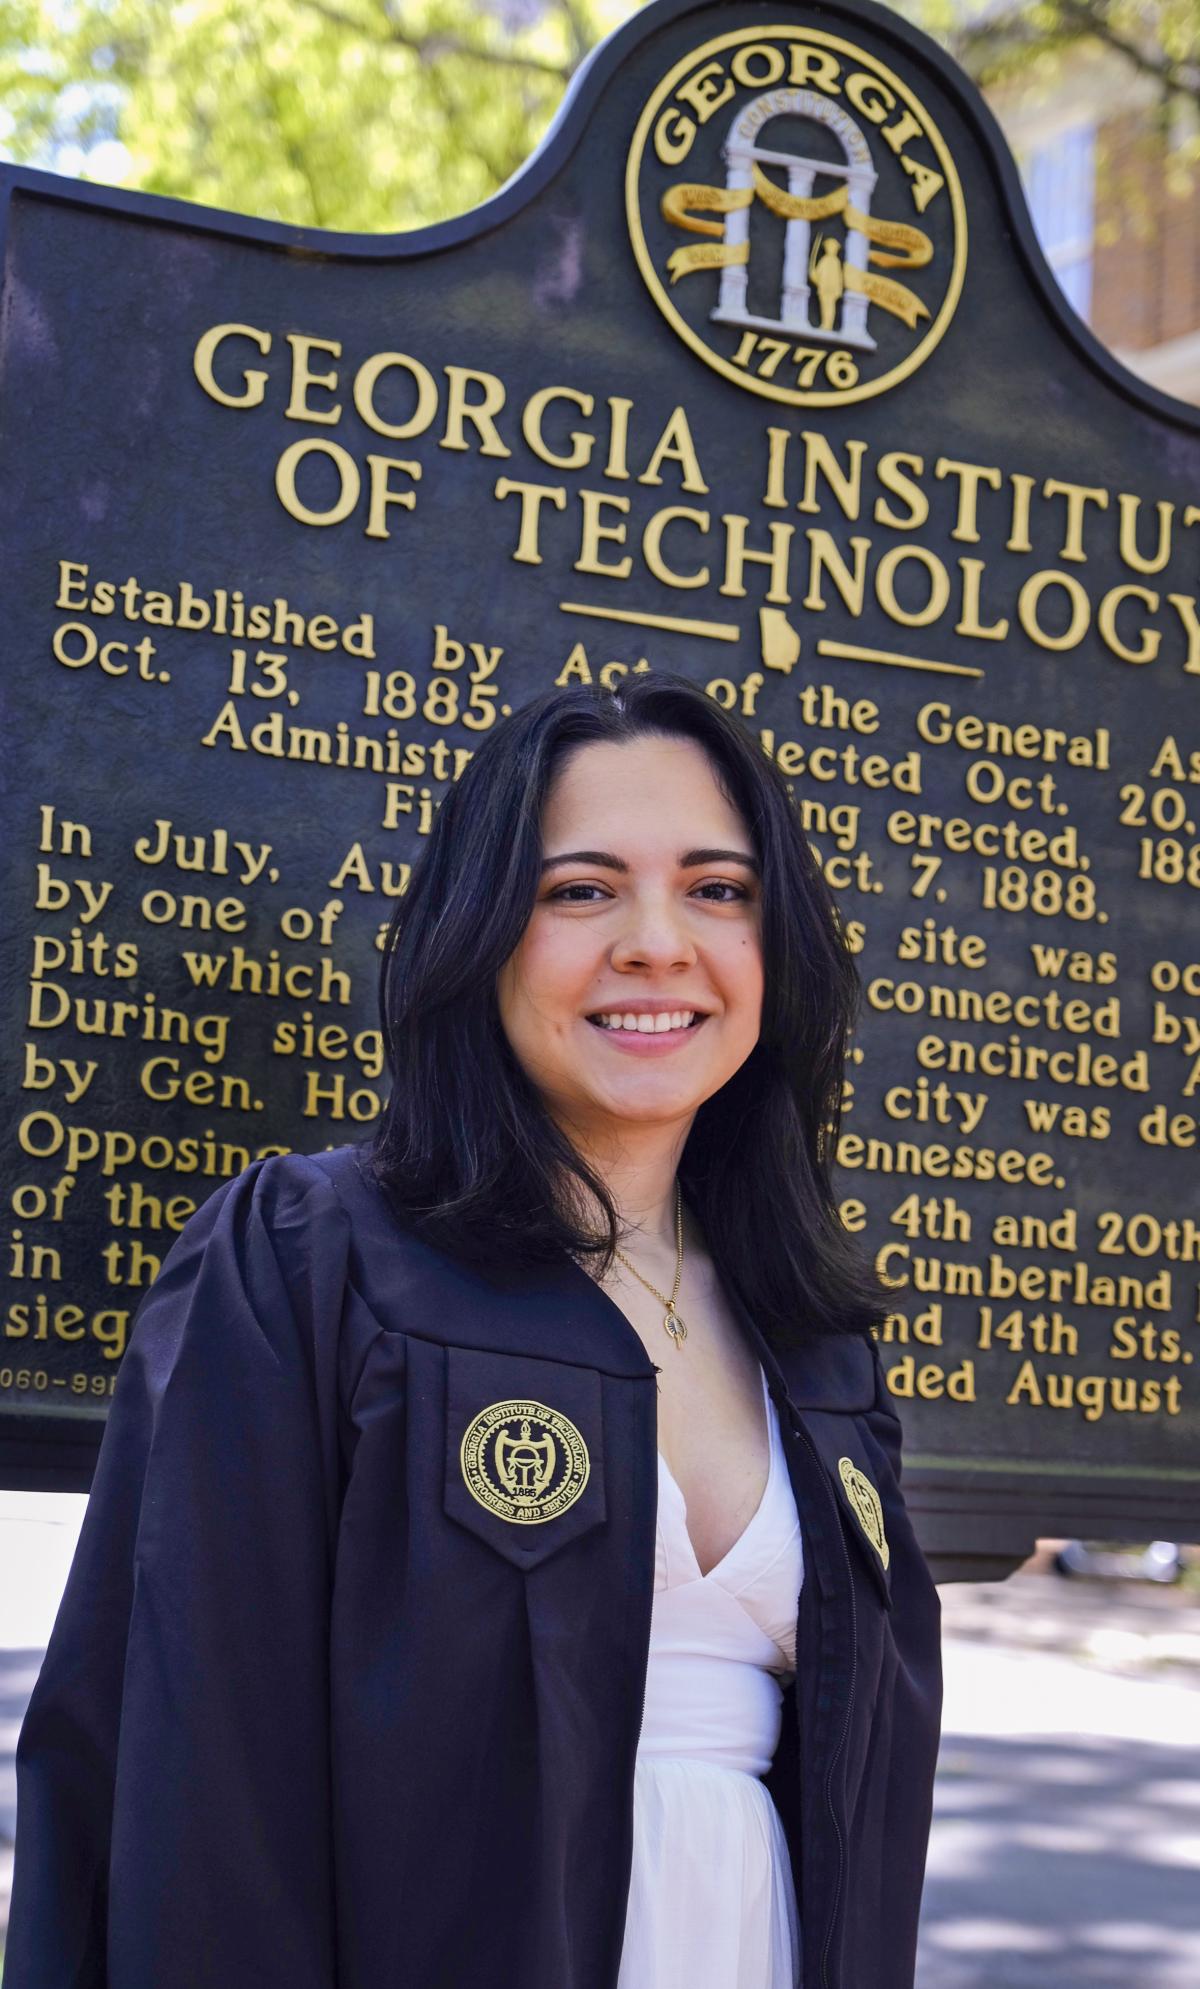 Natalia Barrera Villamizar stands by the Georgia Tech historical marker in her commencement regalia